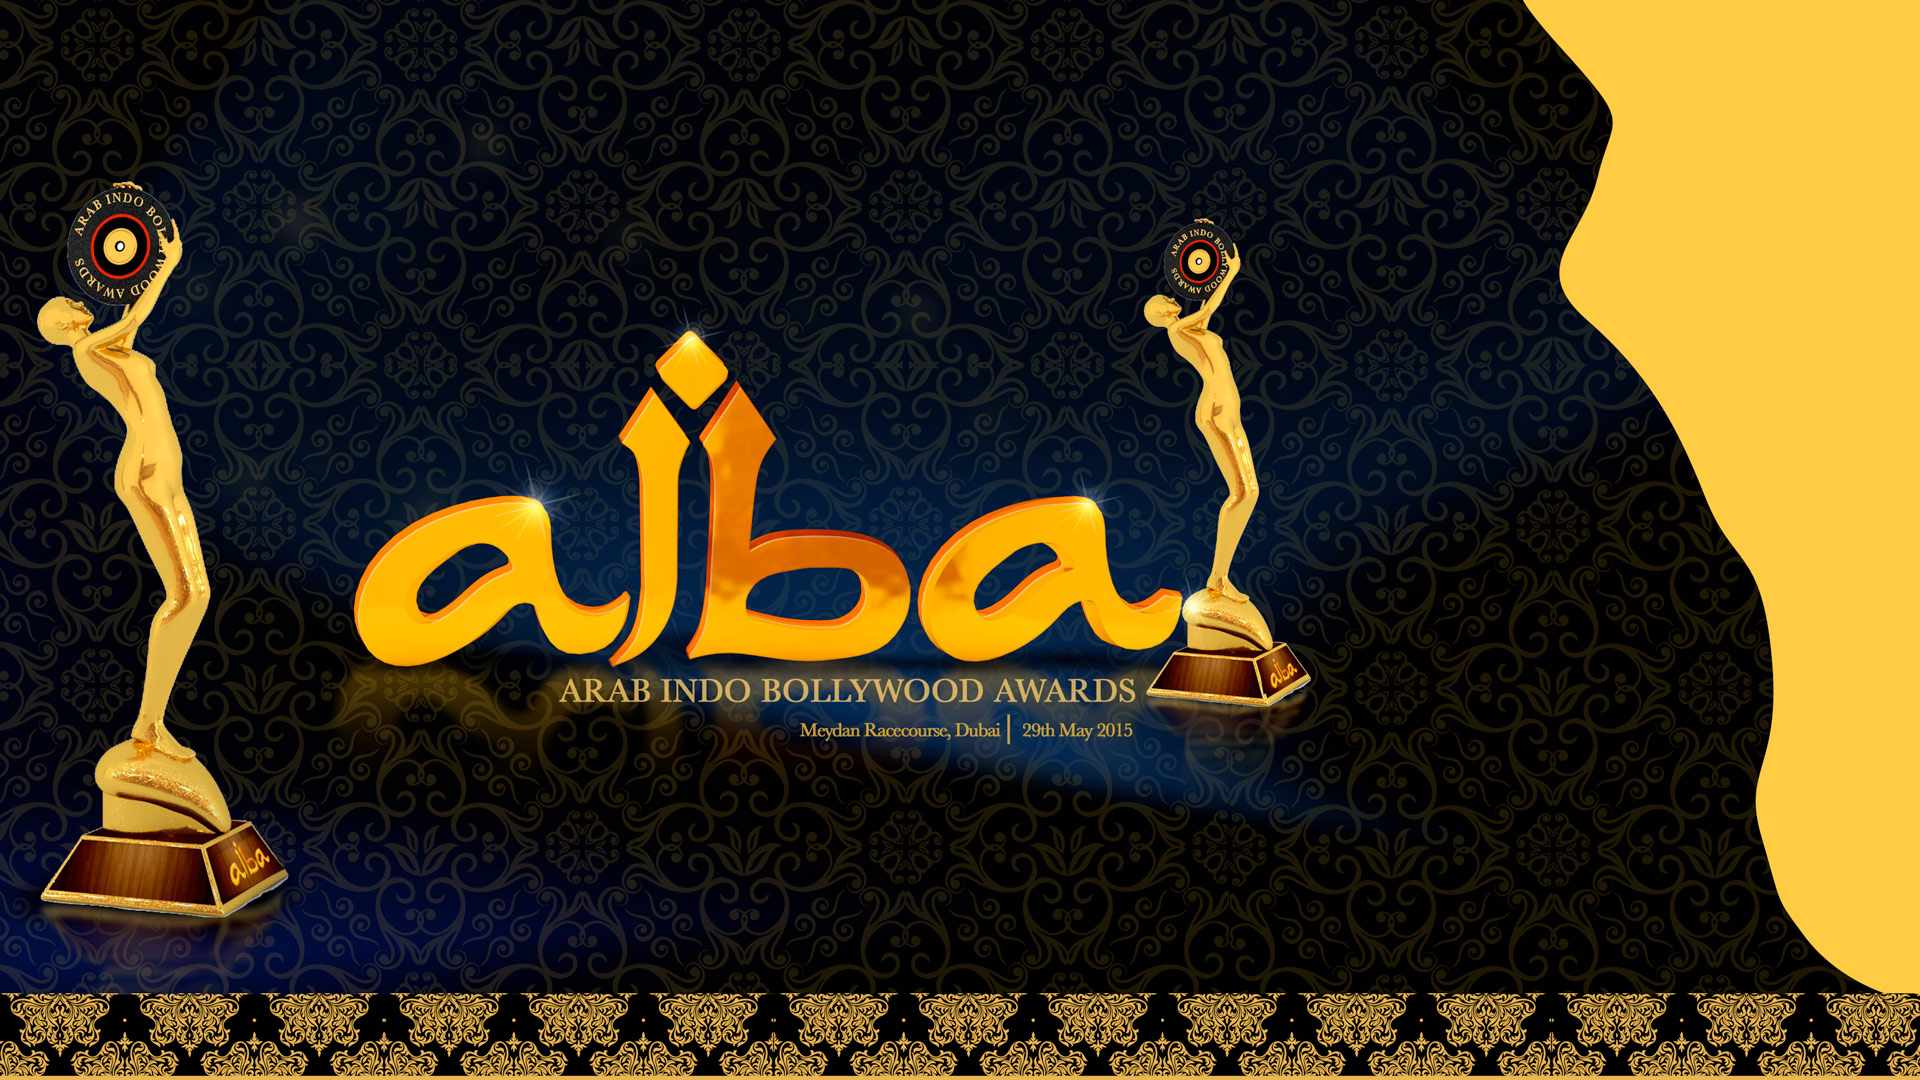 AIBAGULF 2015 – Arab Indo Bollywood Awards in Dubai